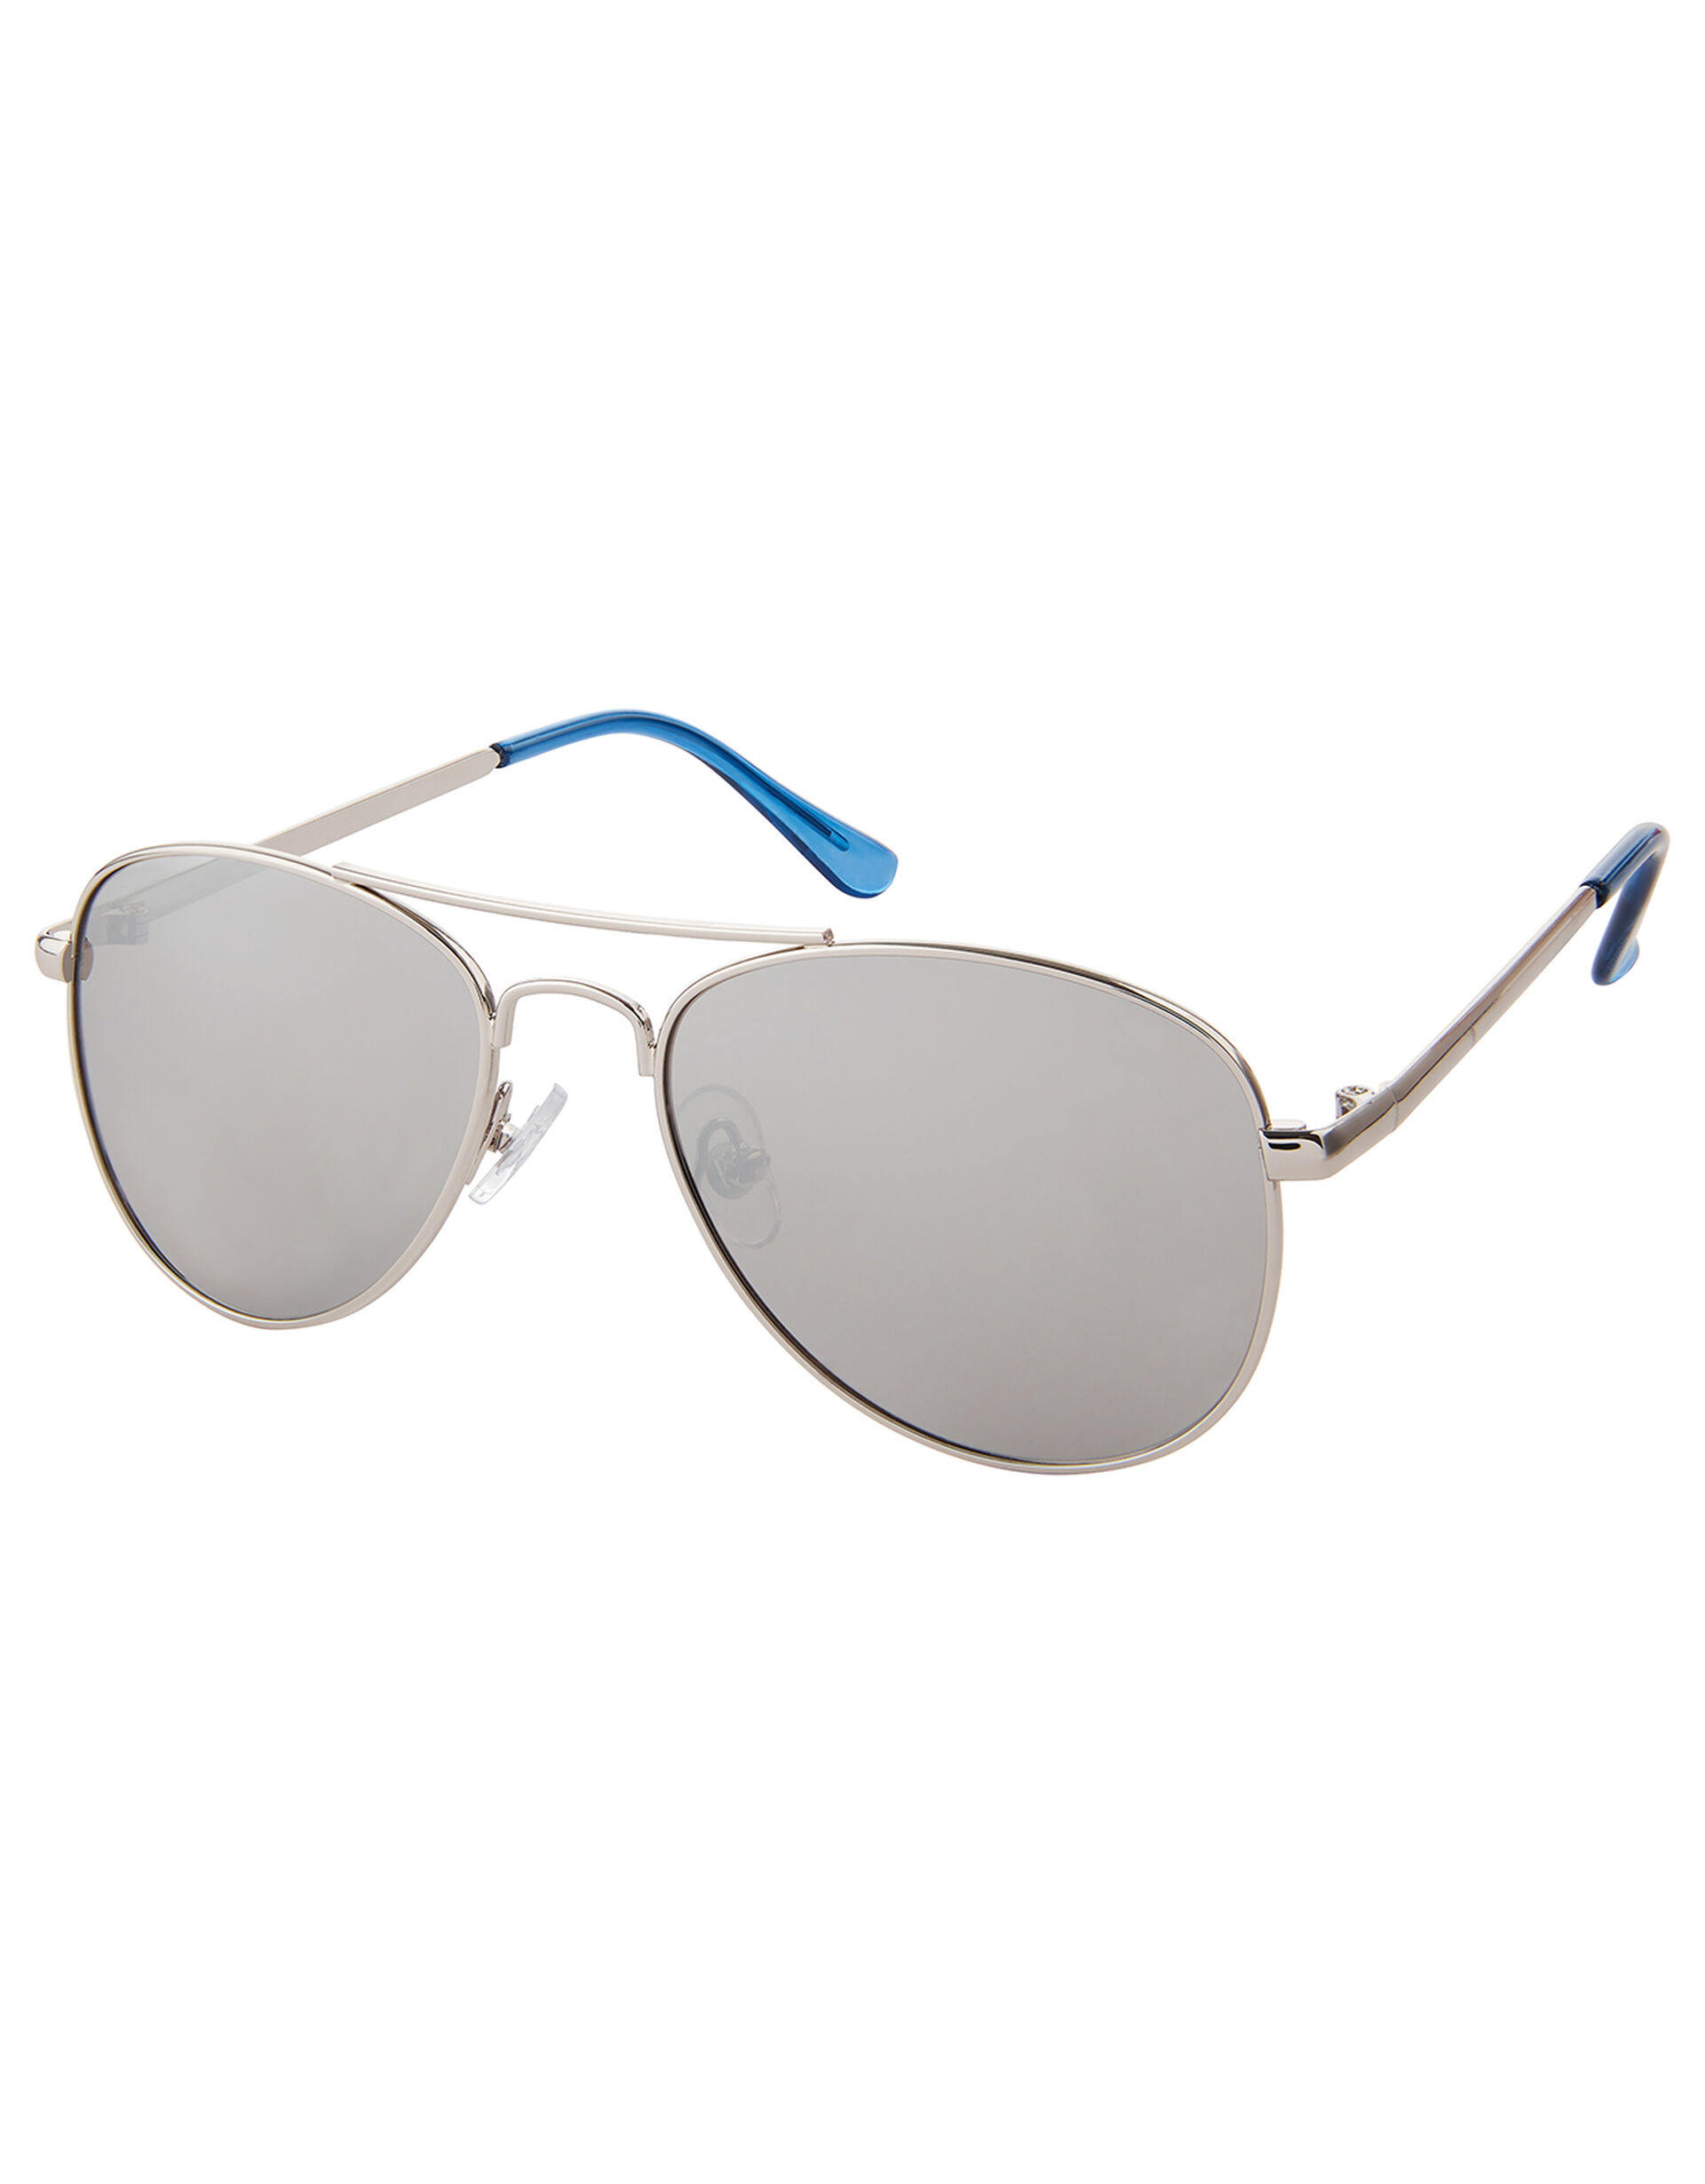 Blue Aviator Sunglasses, , large